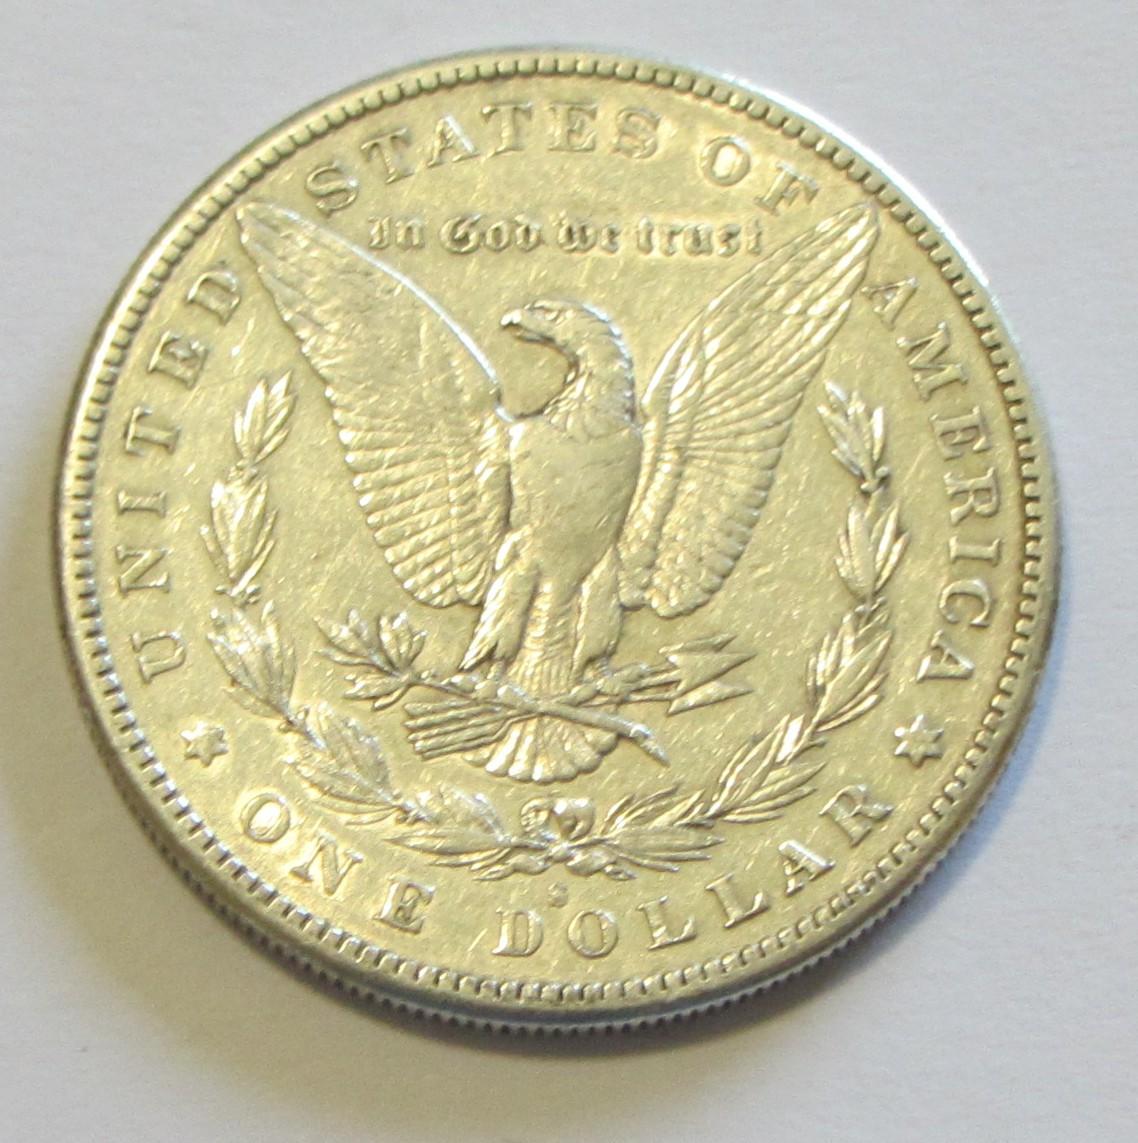 $1 1883-S MORGAN